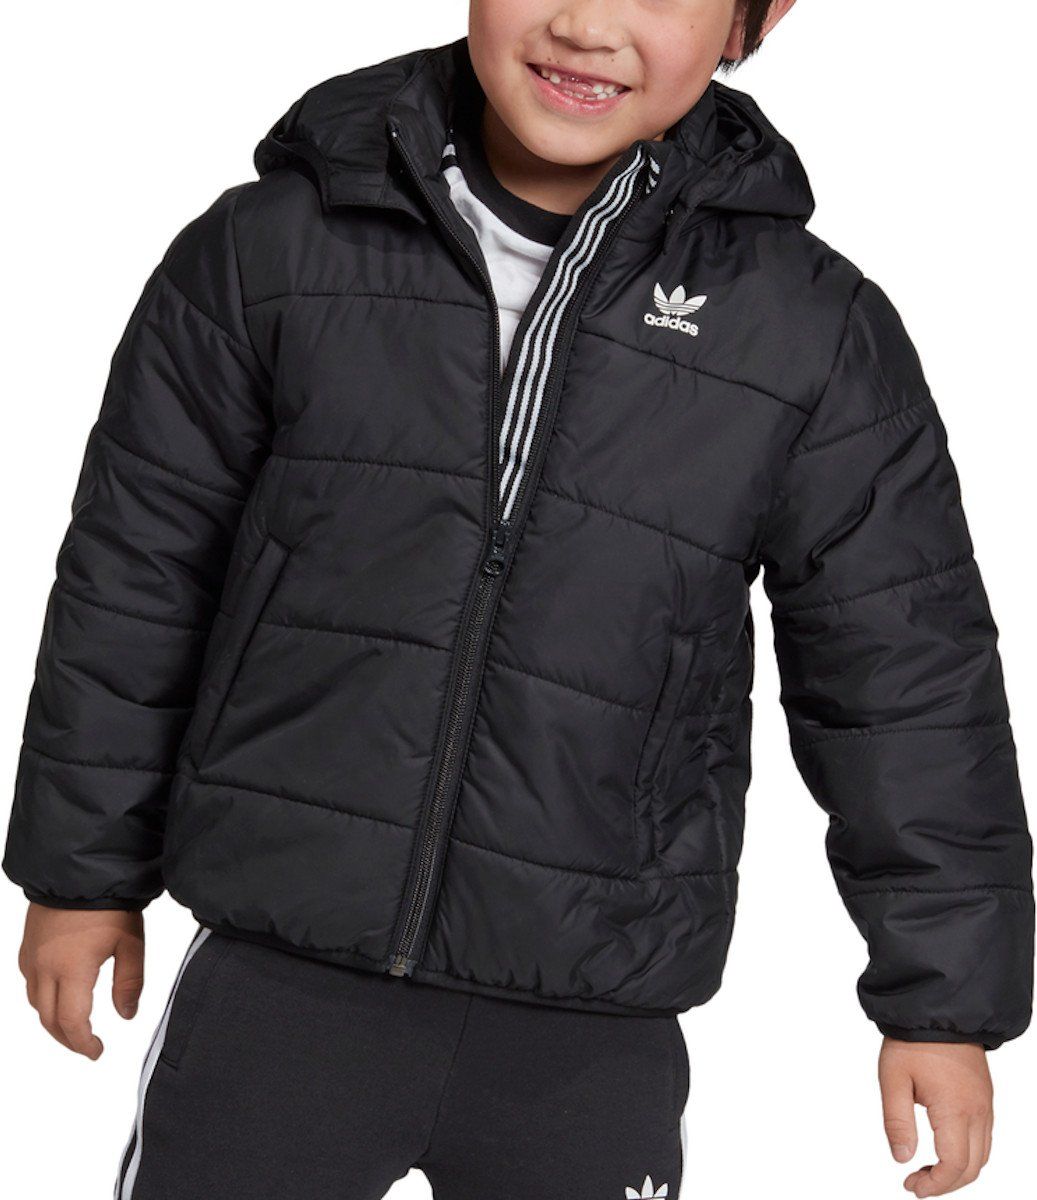 Bunda s kapucí adidas Originals WINTER JKT kids ed7735 Velikost 110 - obrázek 1